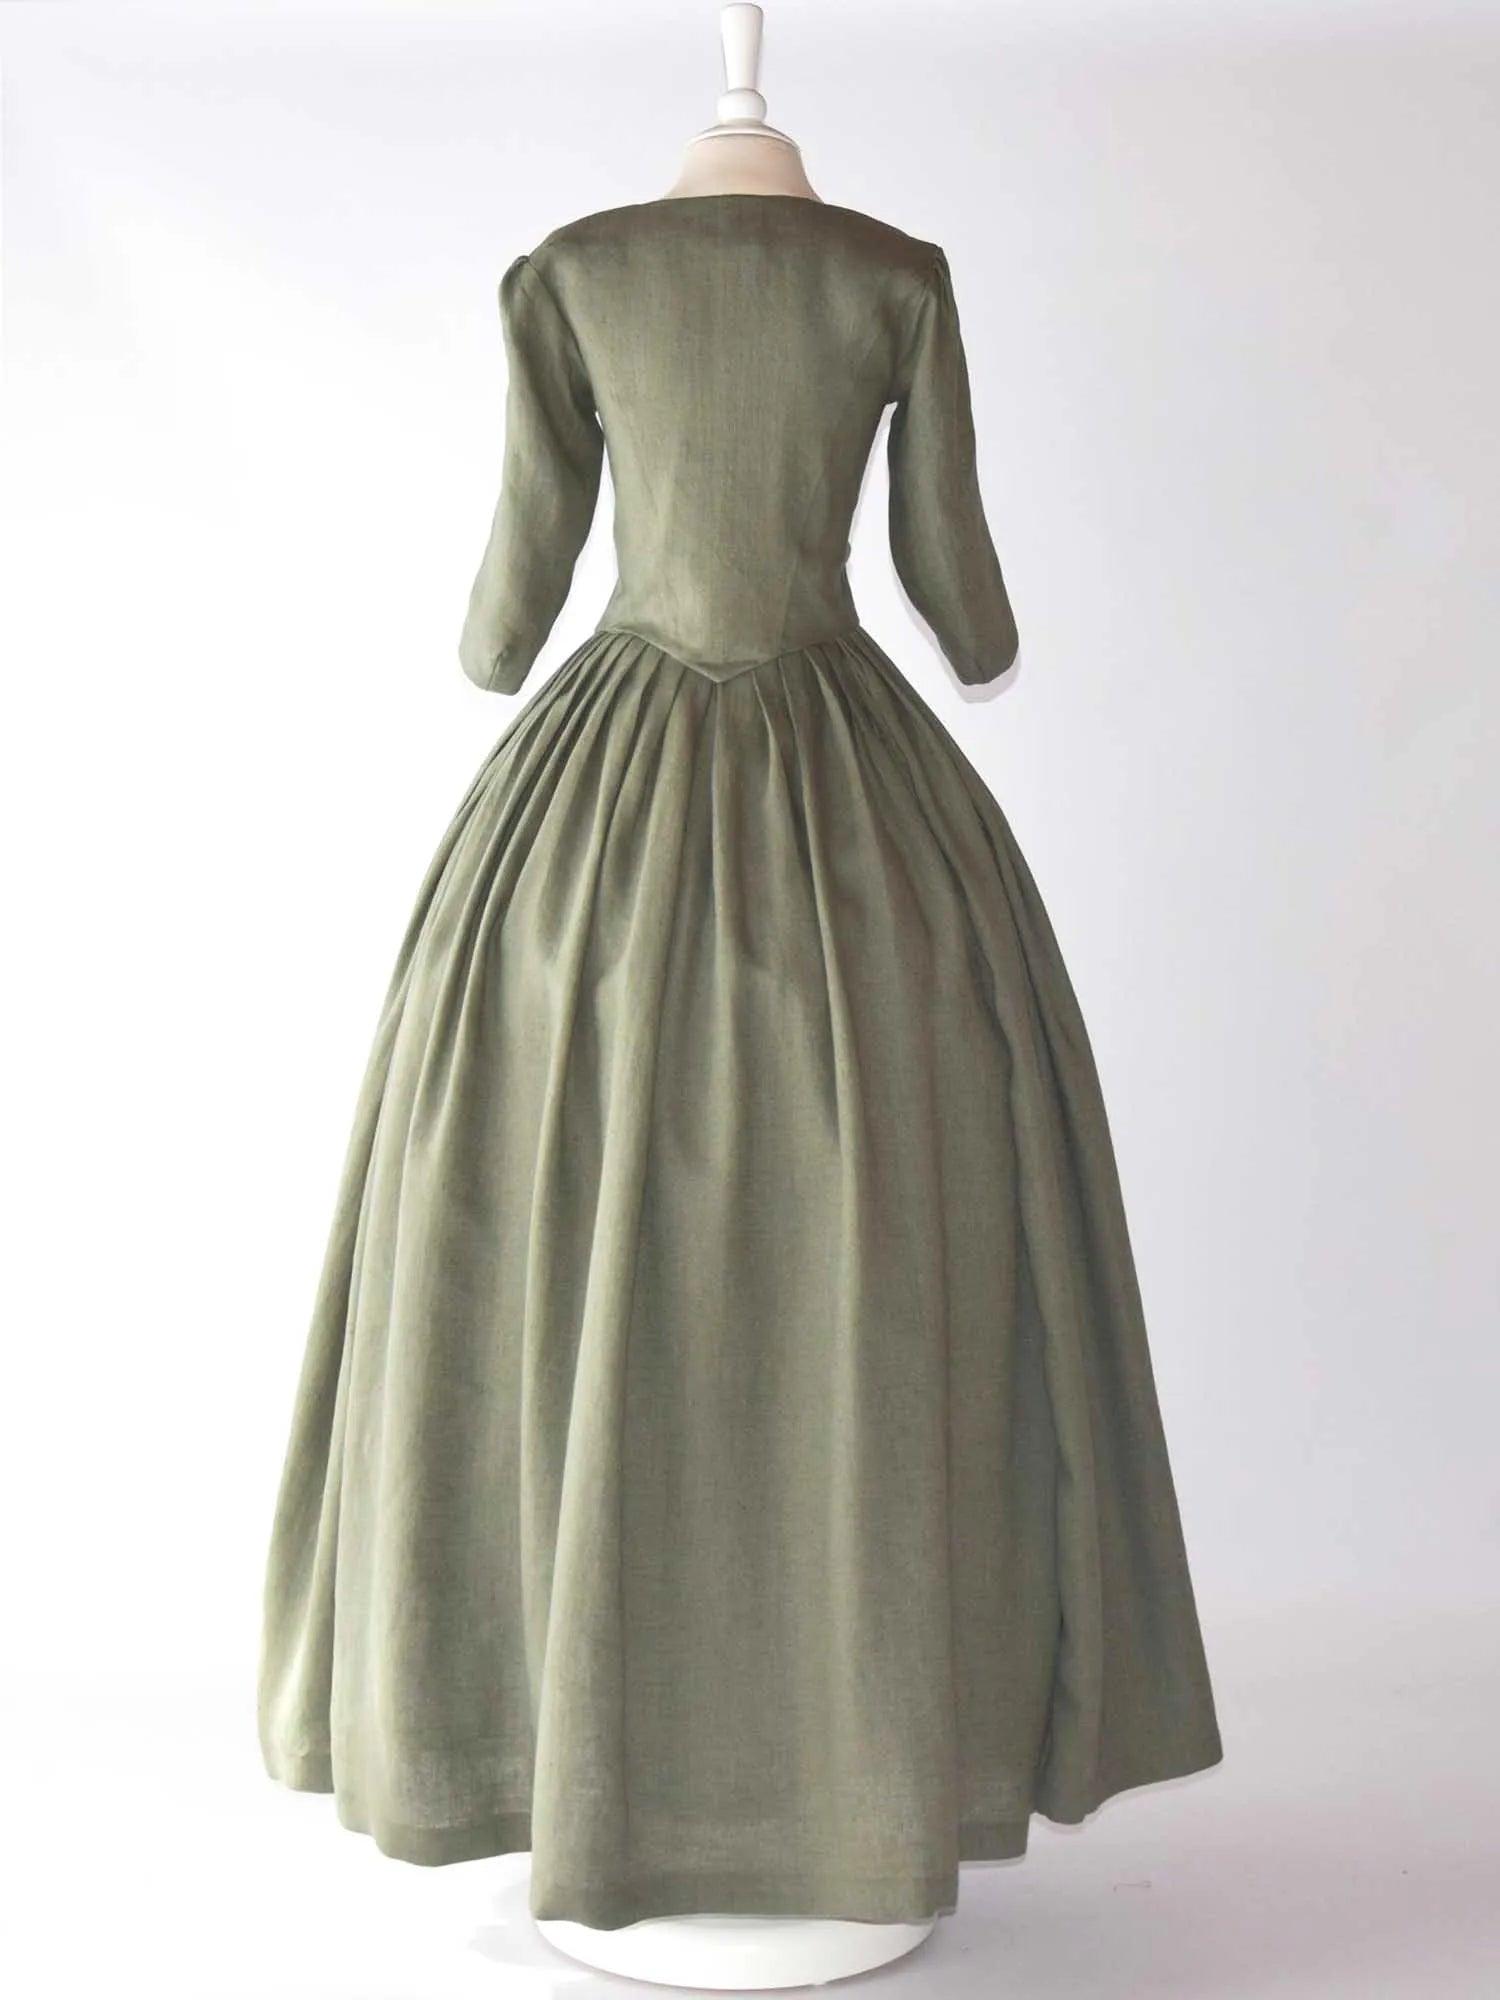 Historical Costume in Sage Green Linen - Atelier Serraspina